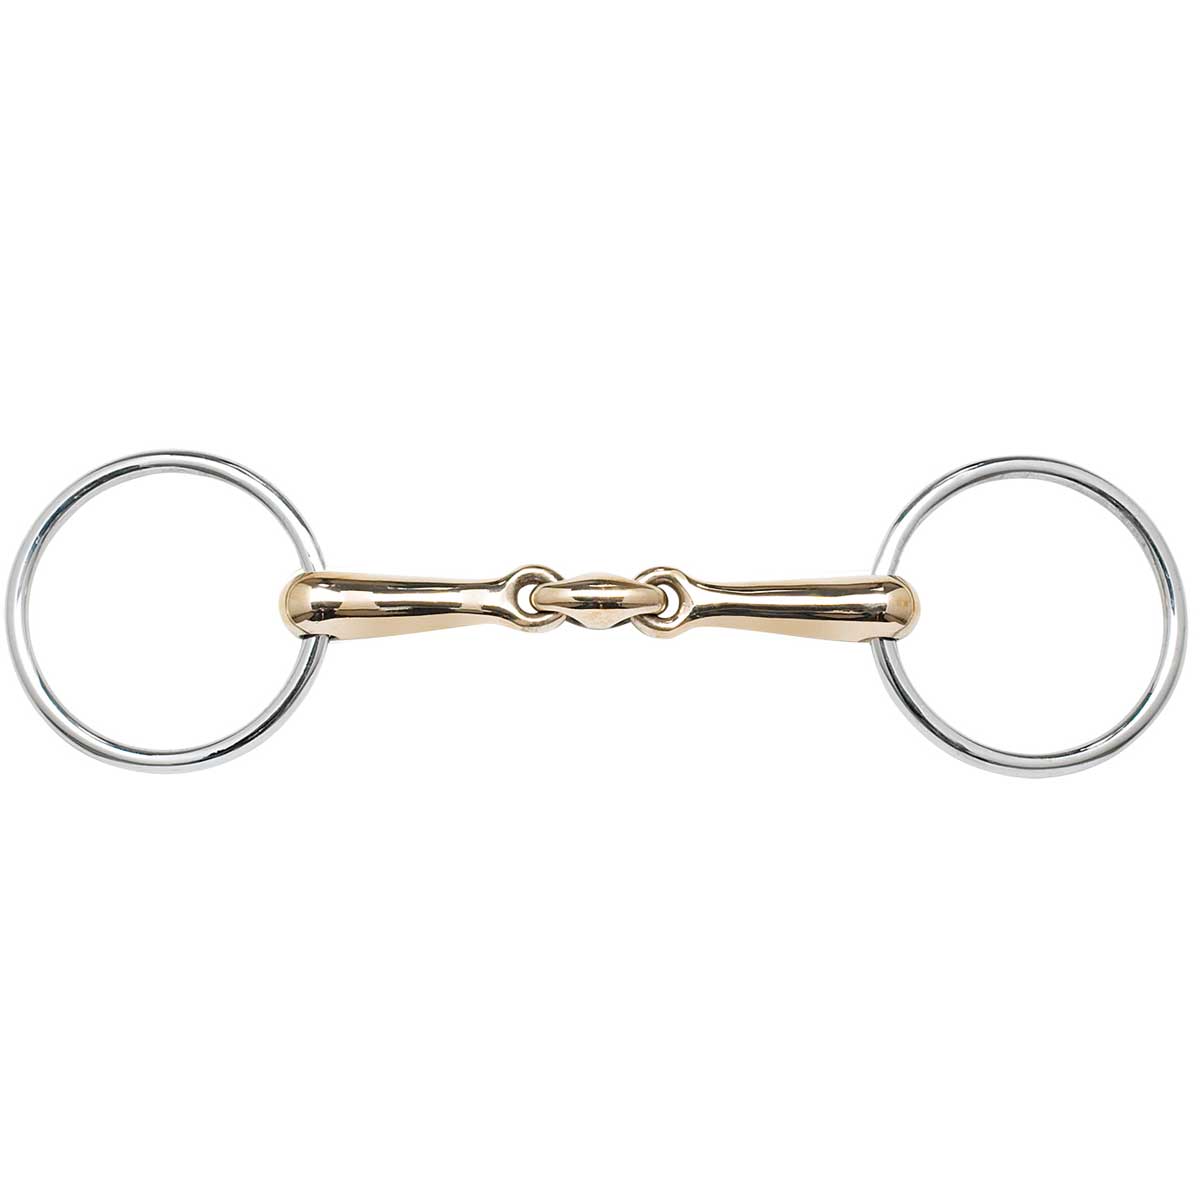 BUSSE Bradoon KAUGAN®, Stainless-steel rings, French-link